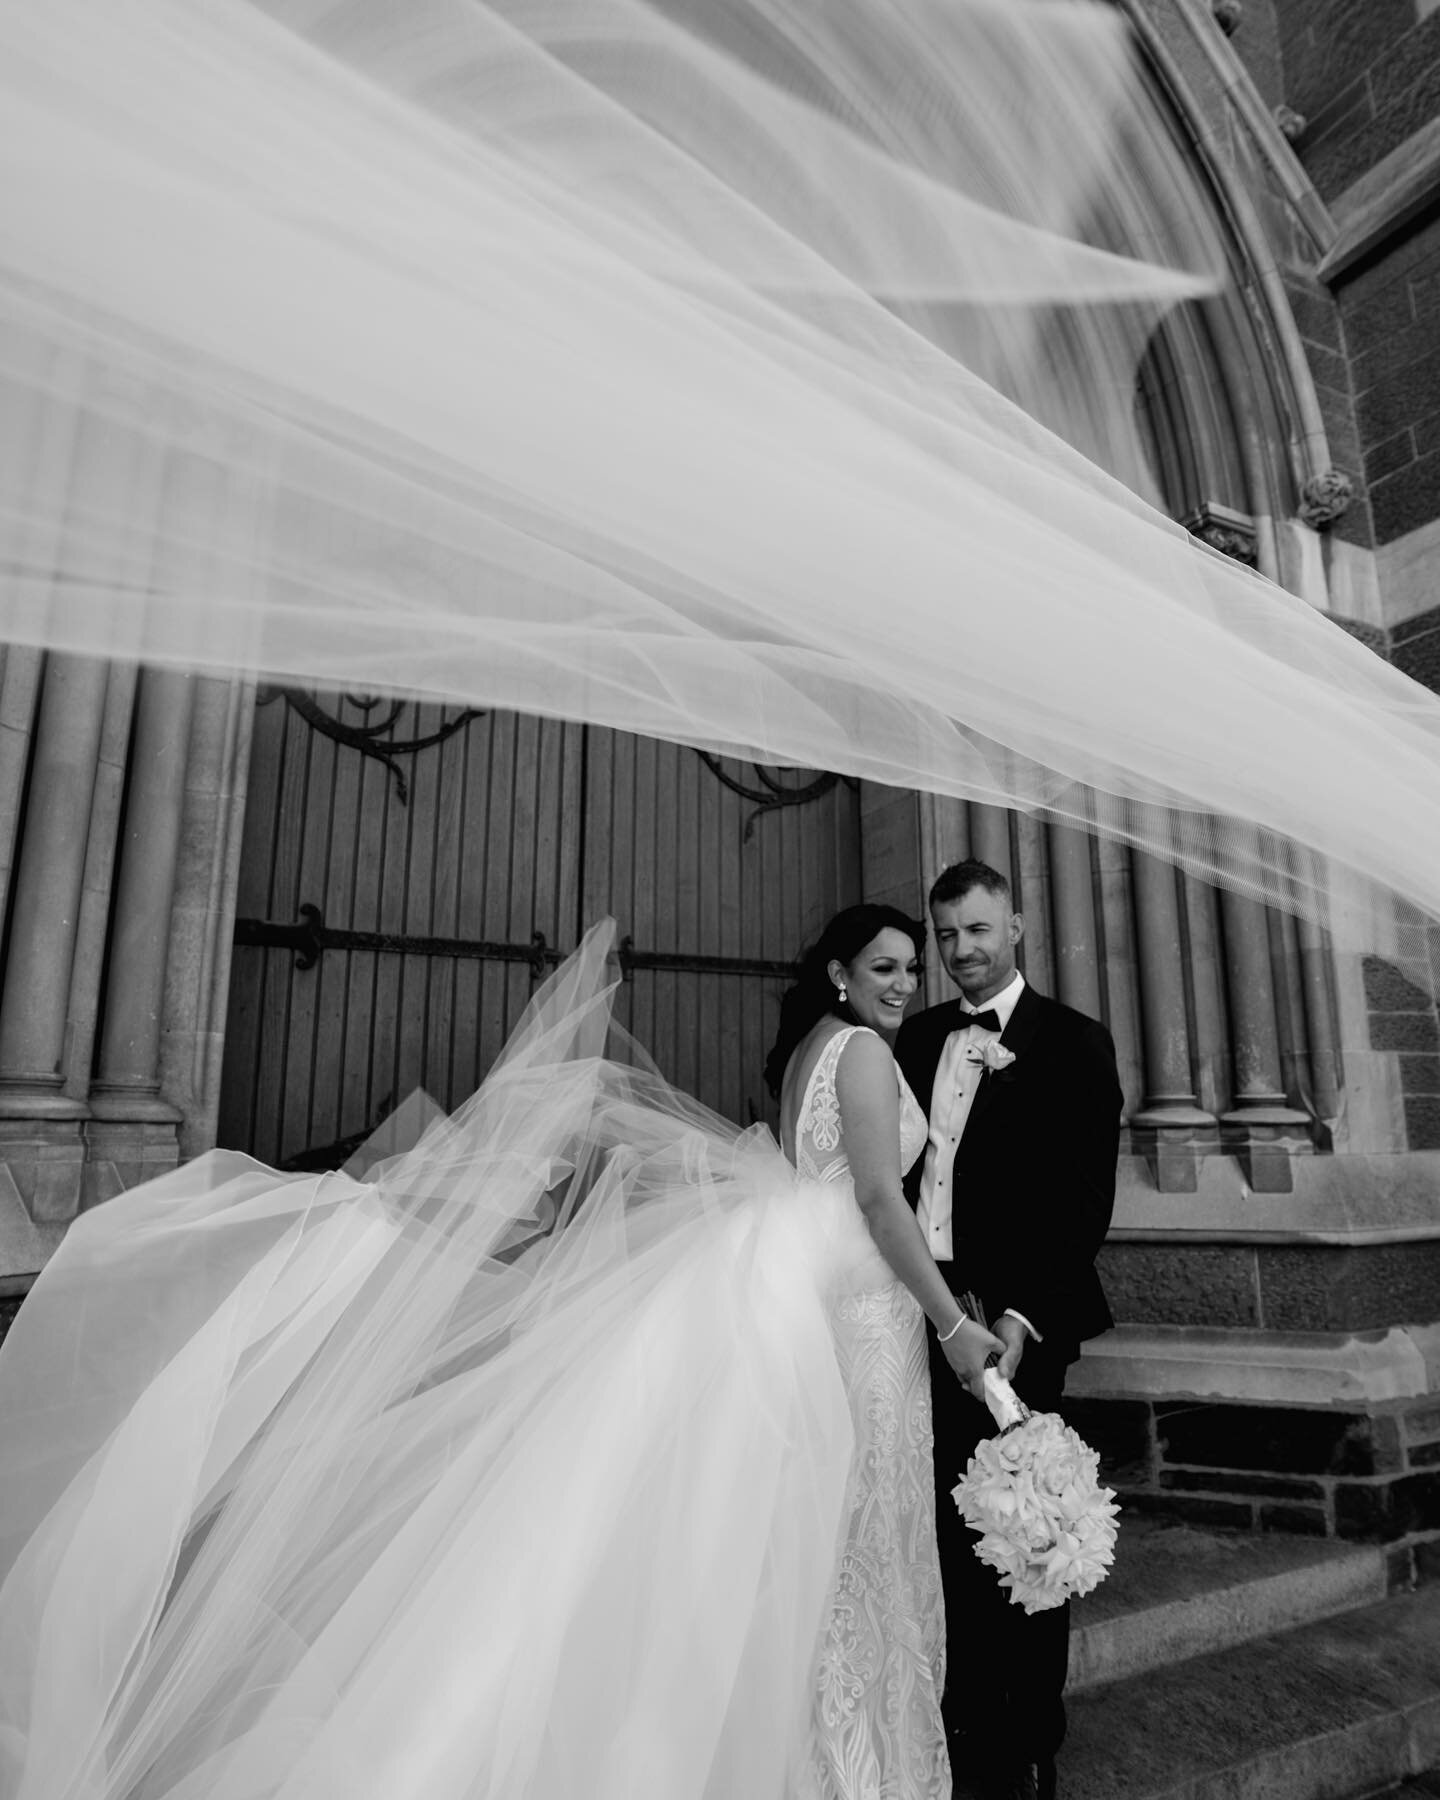 A bit of wind, hell yes! 

#adelaideweddingphotographer #photographer #photography #weddingphotography #weddings #sawedding #southaustralia #barossaweddingphotographer #barossaweddings #sa #bride #groom #weddingdress #veil